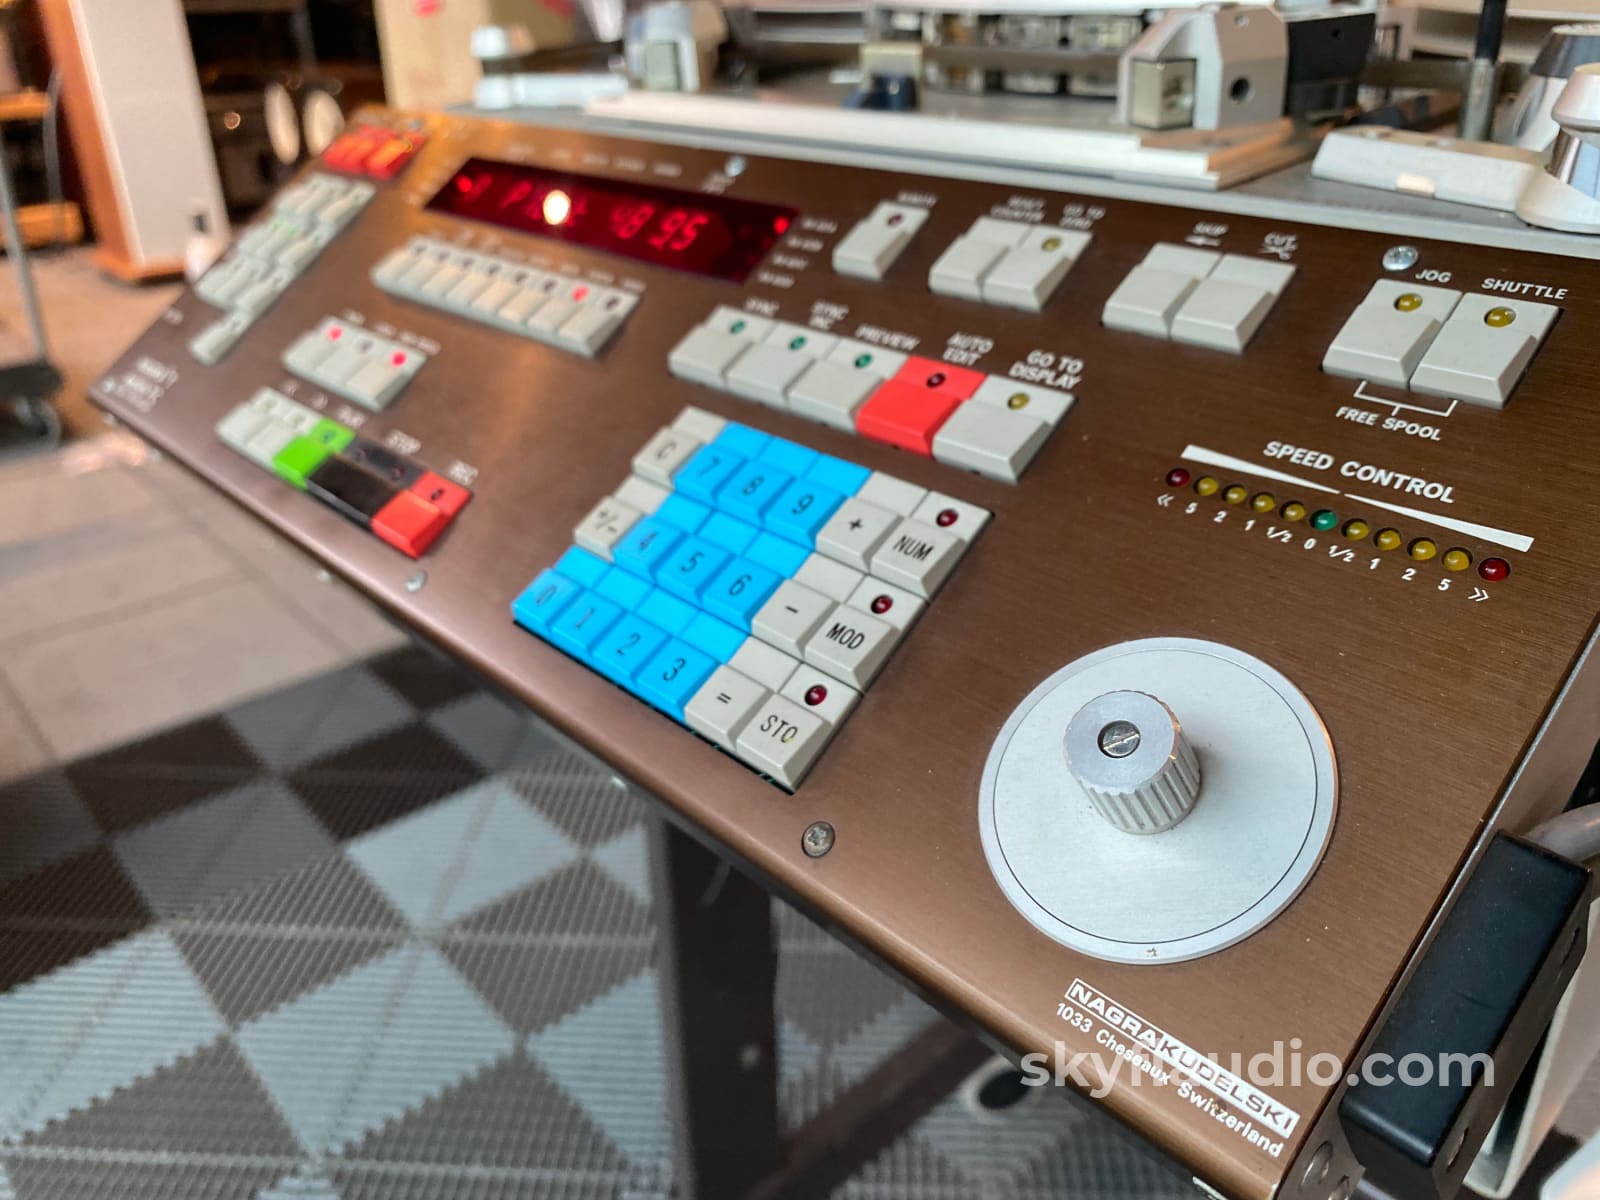 Nagra T-Audio Reel To Machine - Legendary Ready To Ship Tape Deck